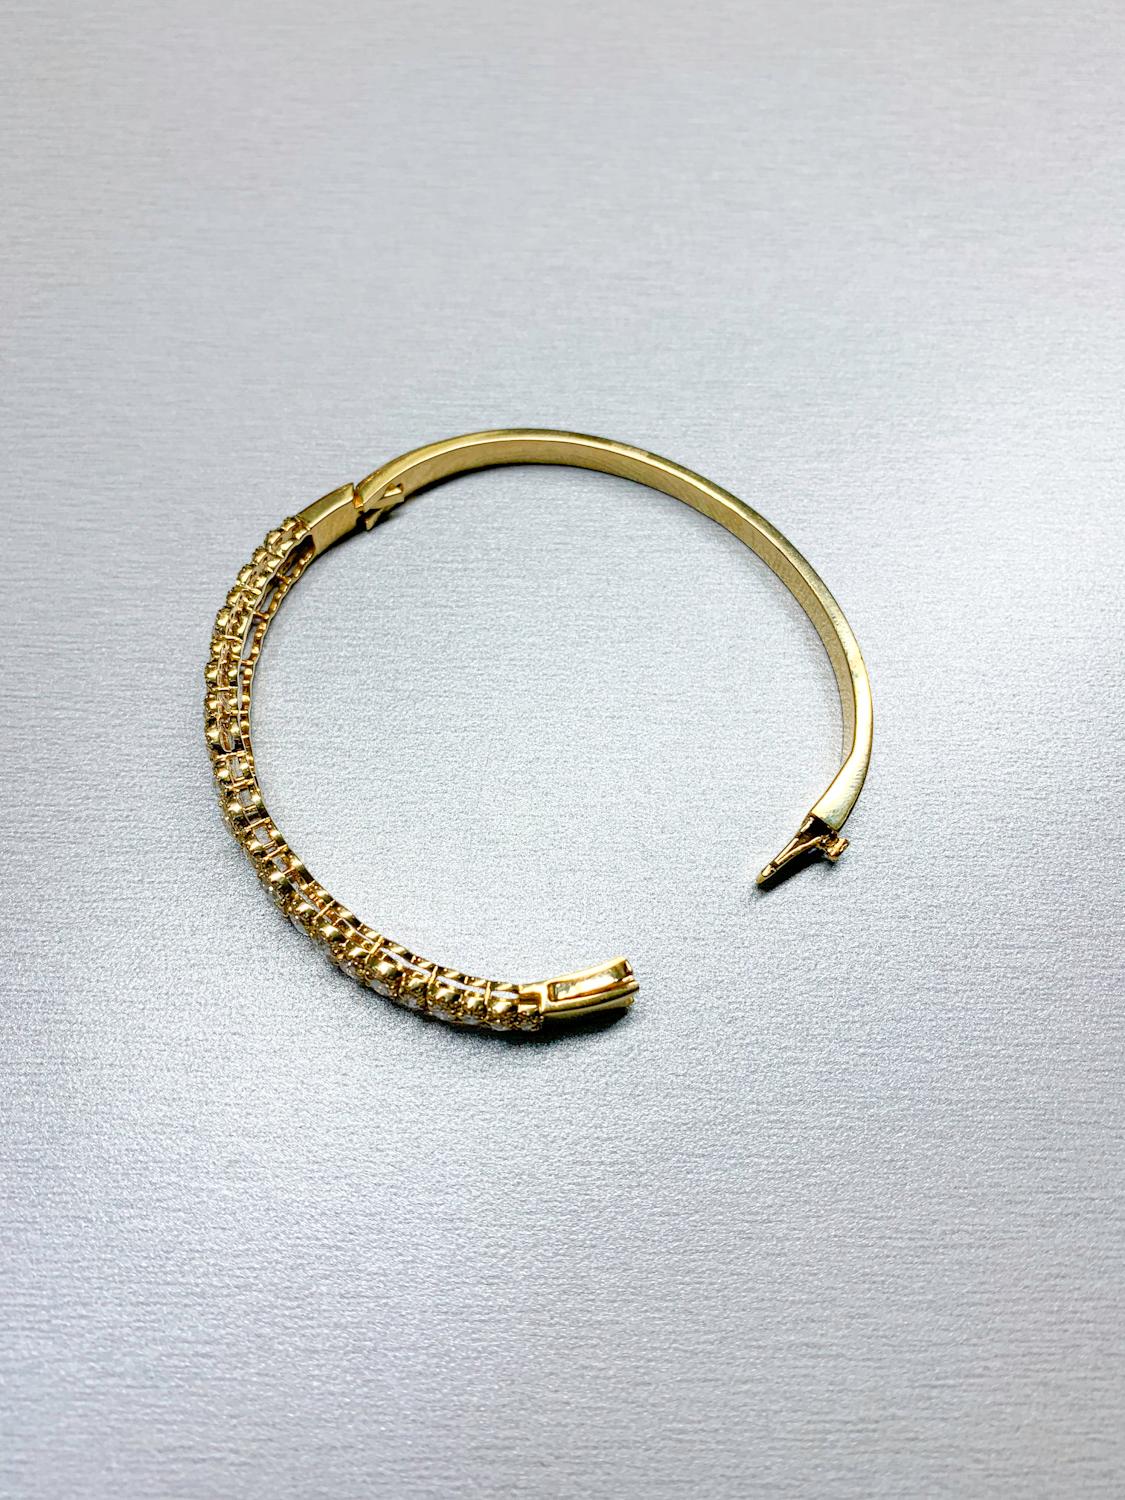 Women's 18K Gold Tennis Bracelet with Rose Cut White Diamonds (2.65 Carats) For Sale